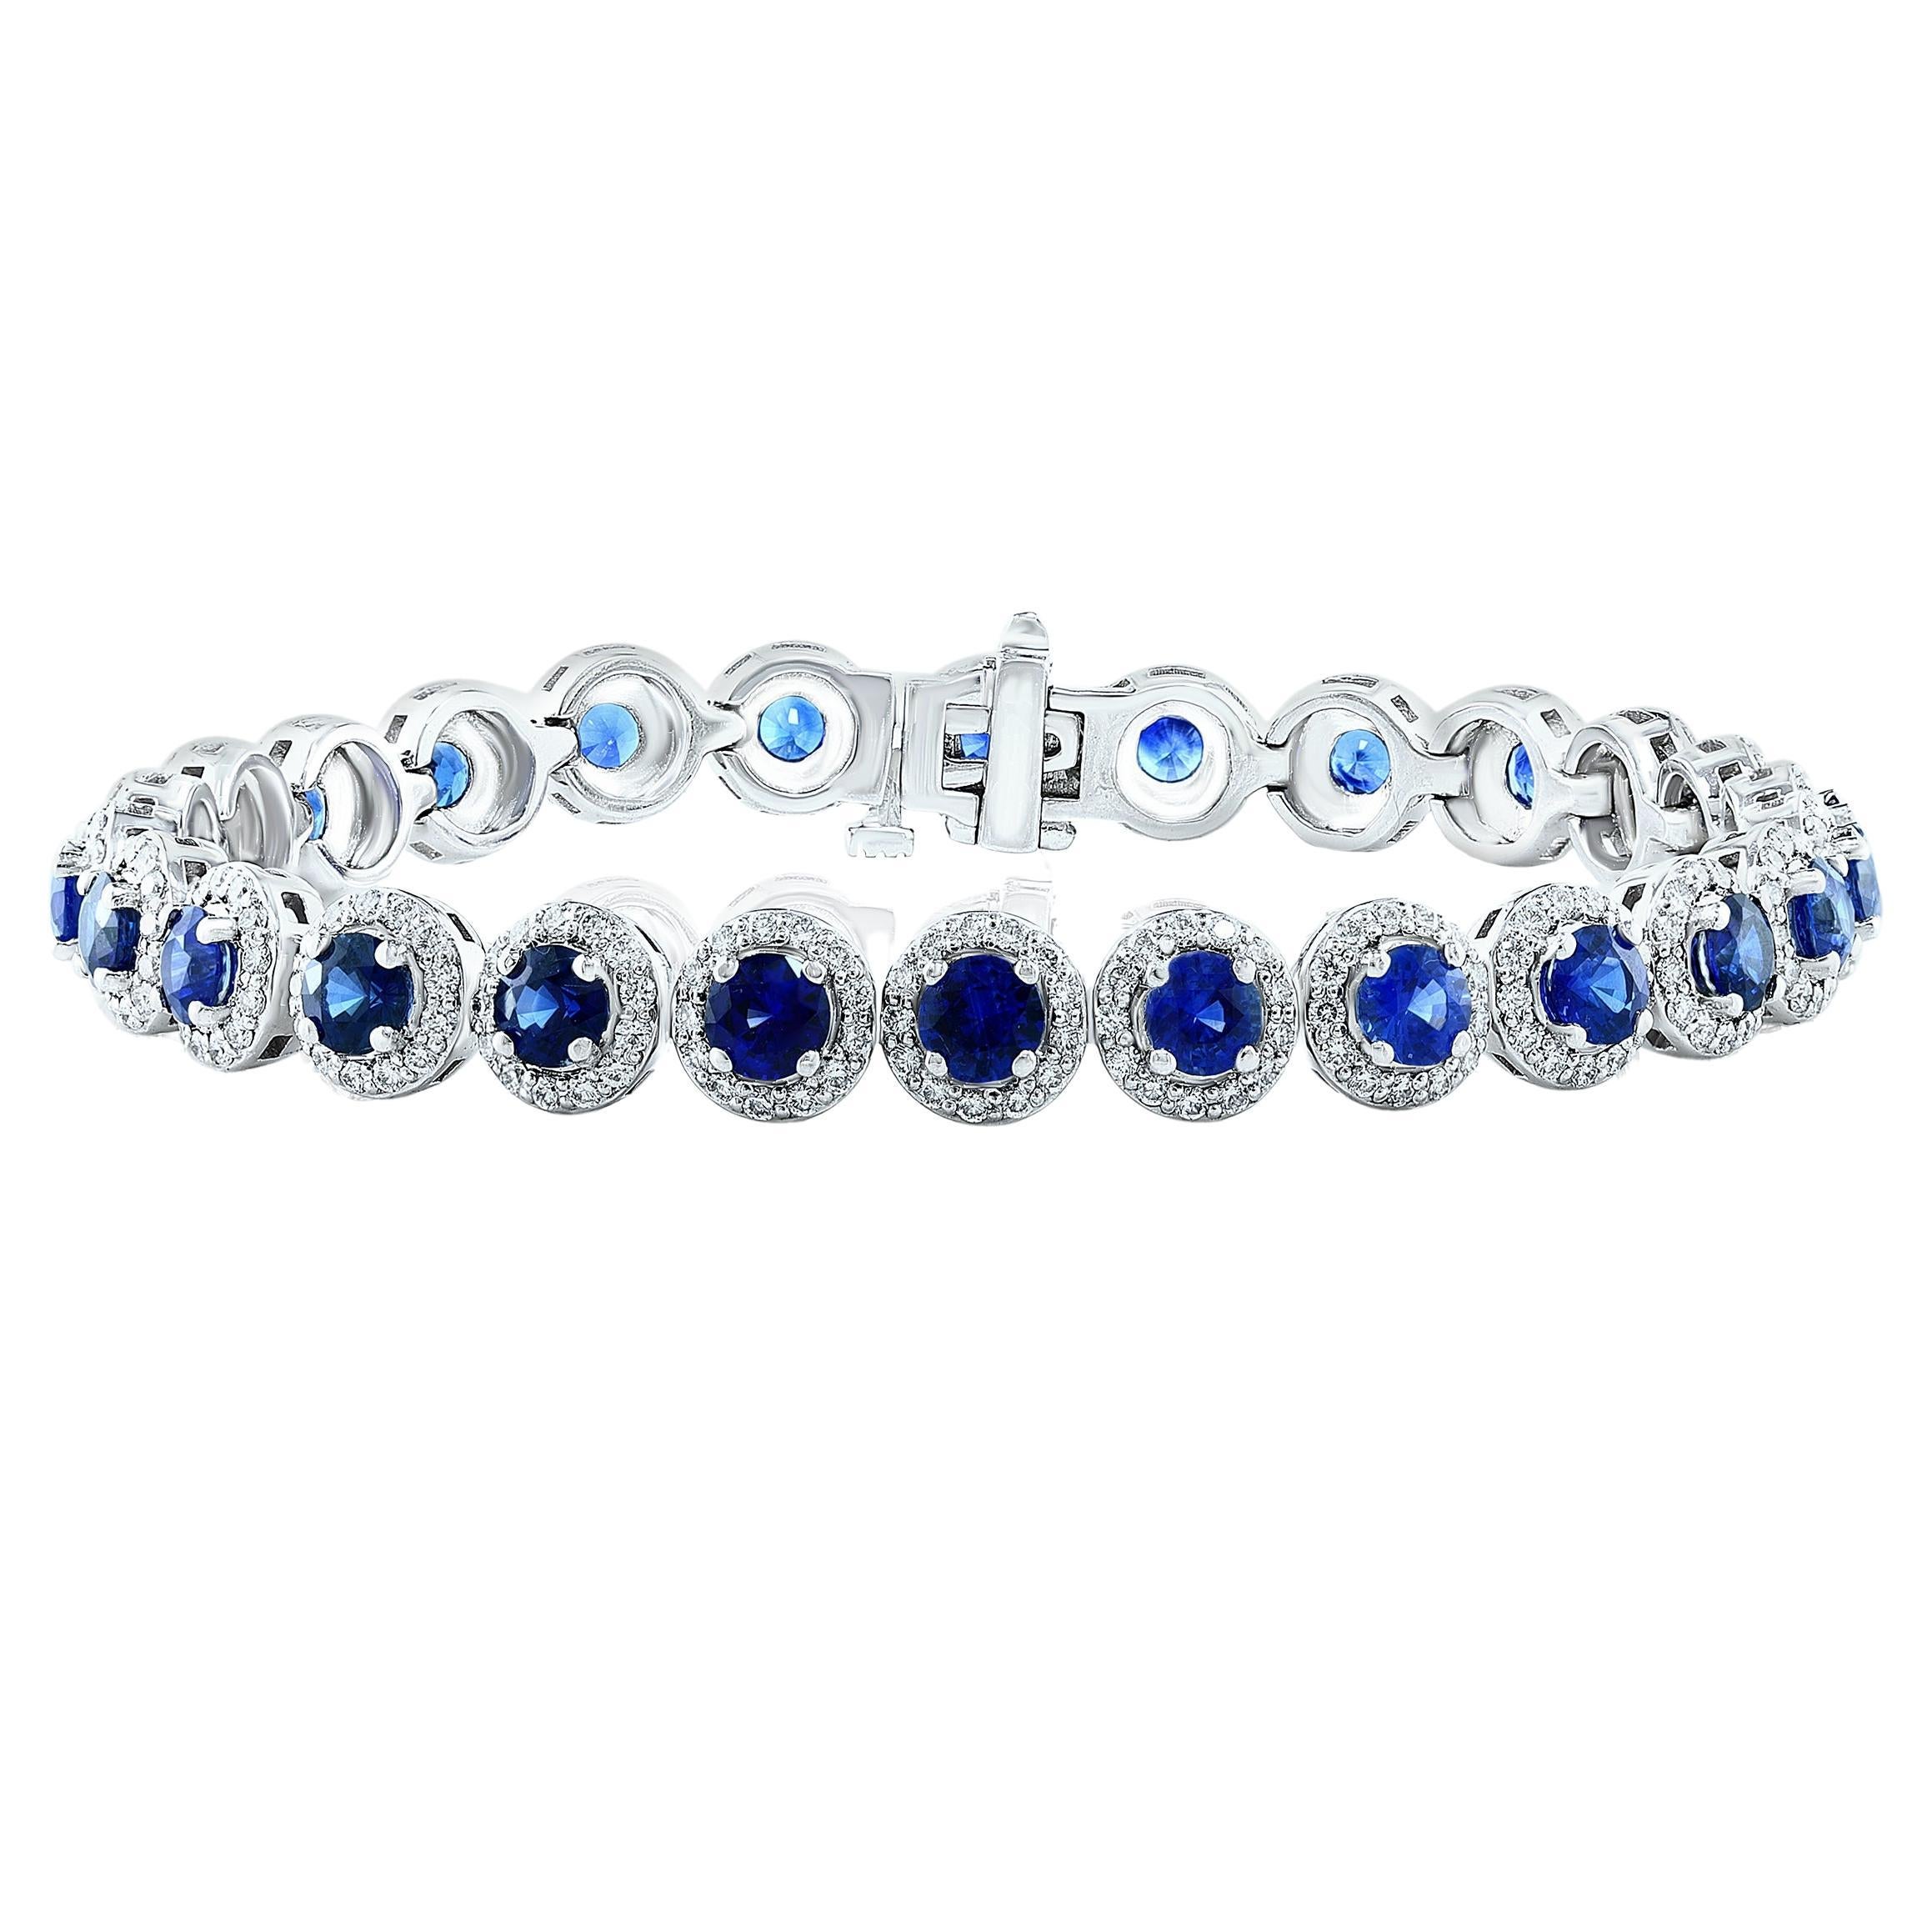 7.47 Carat Blue Sapphire and Diamond Halo Tennis Bracelet in 14k White Gold